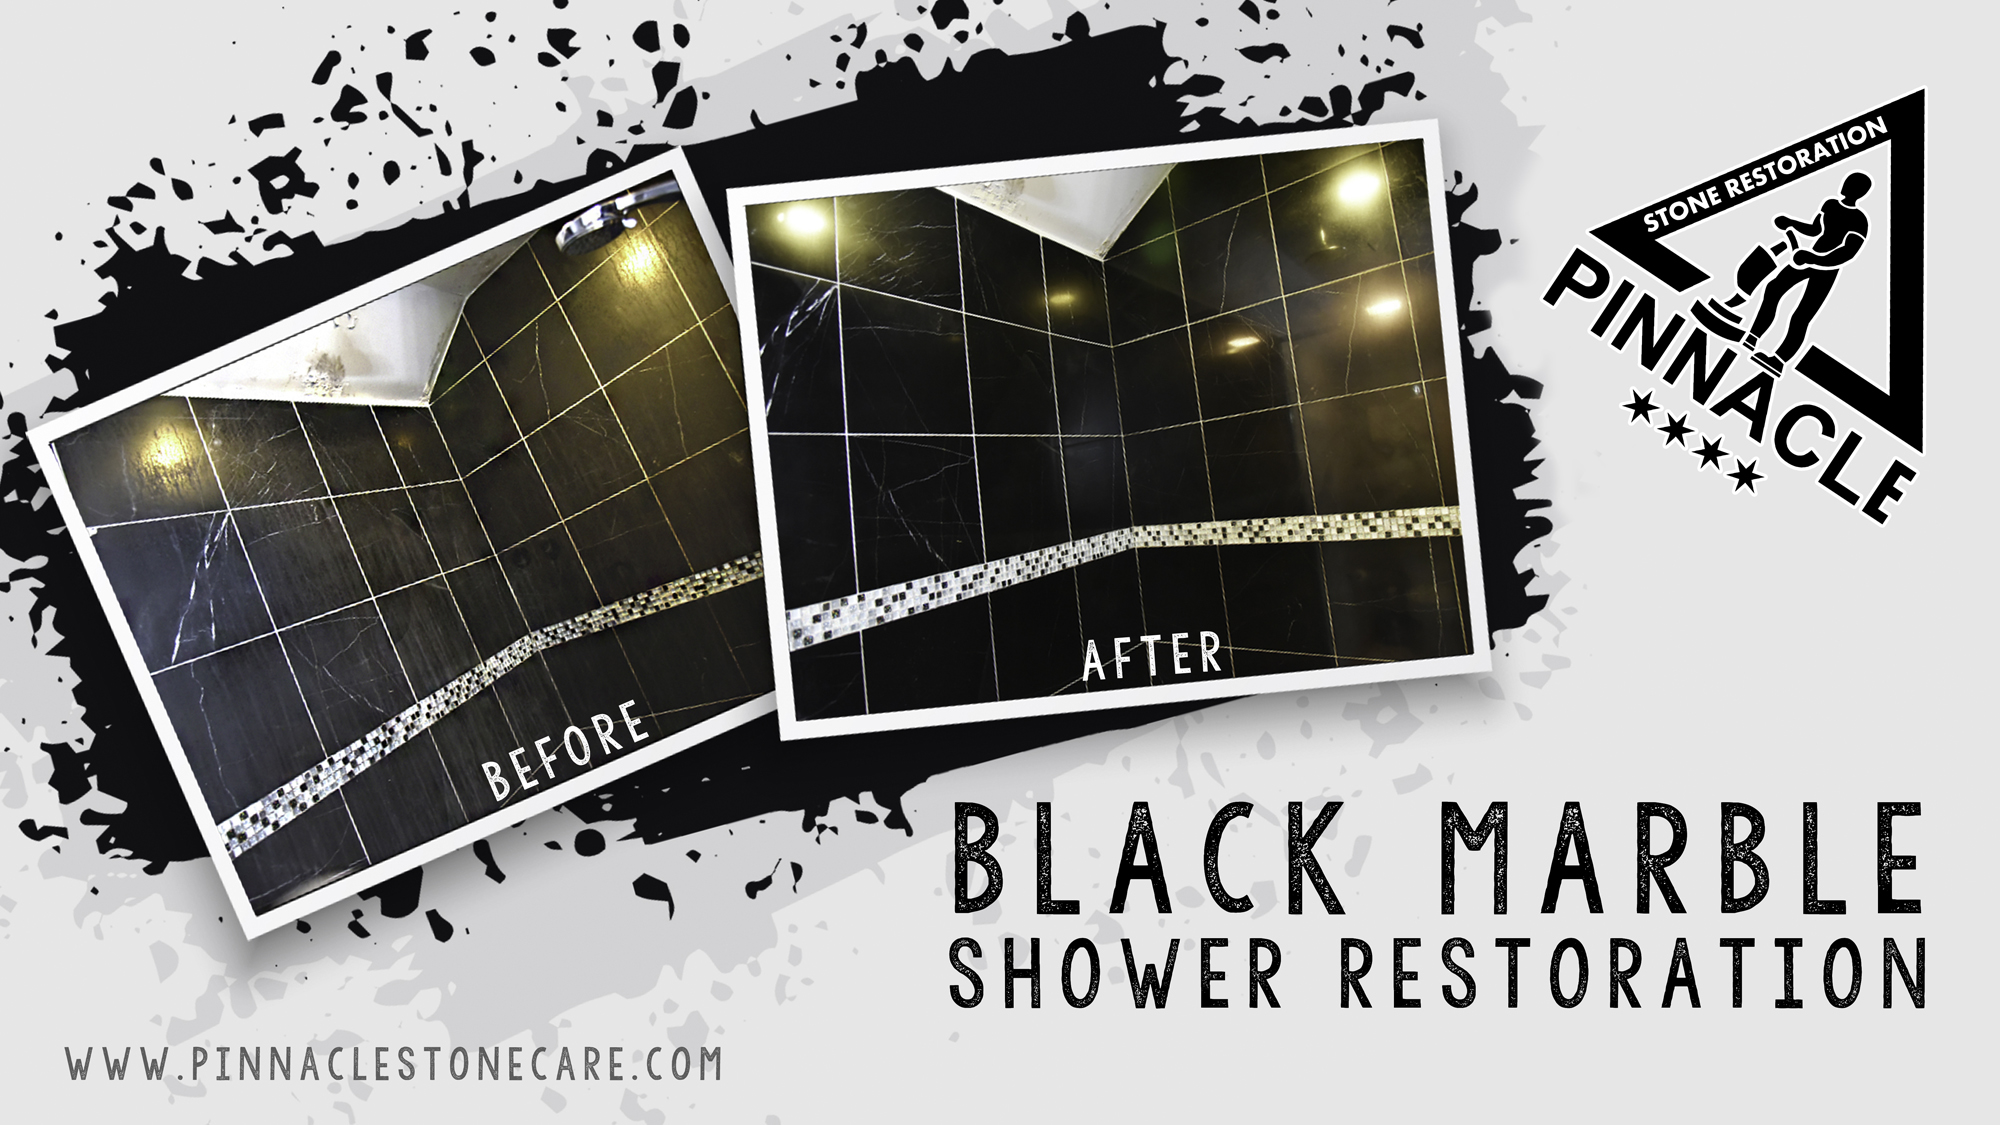 Black marble tile shower restoration – removing acidic cleaner damage, polishing and sealing